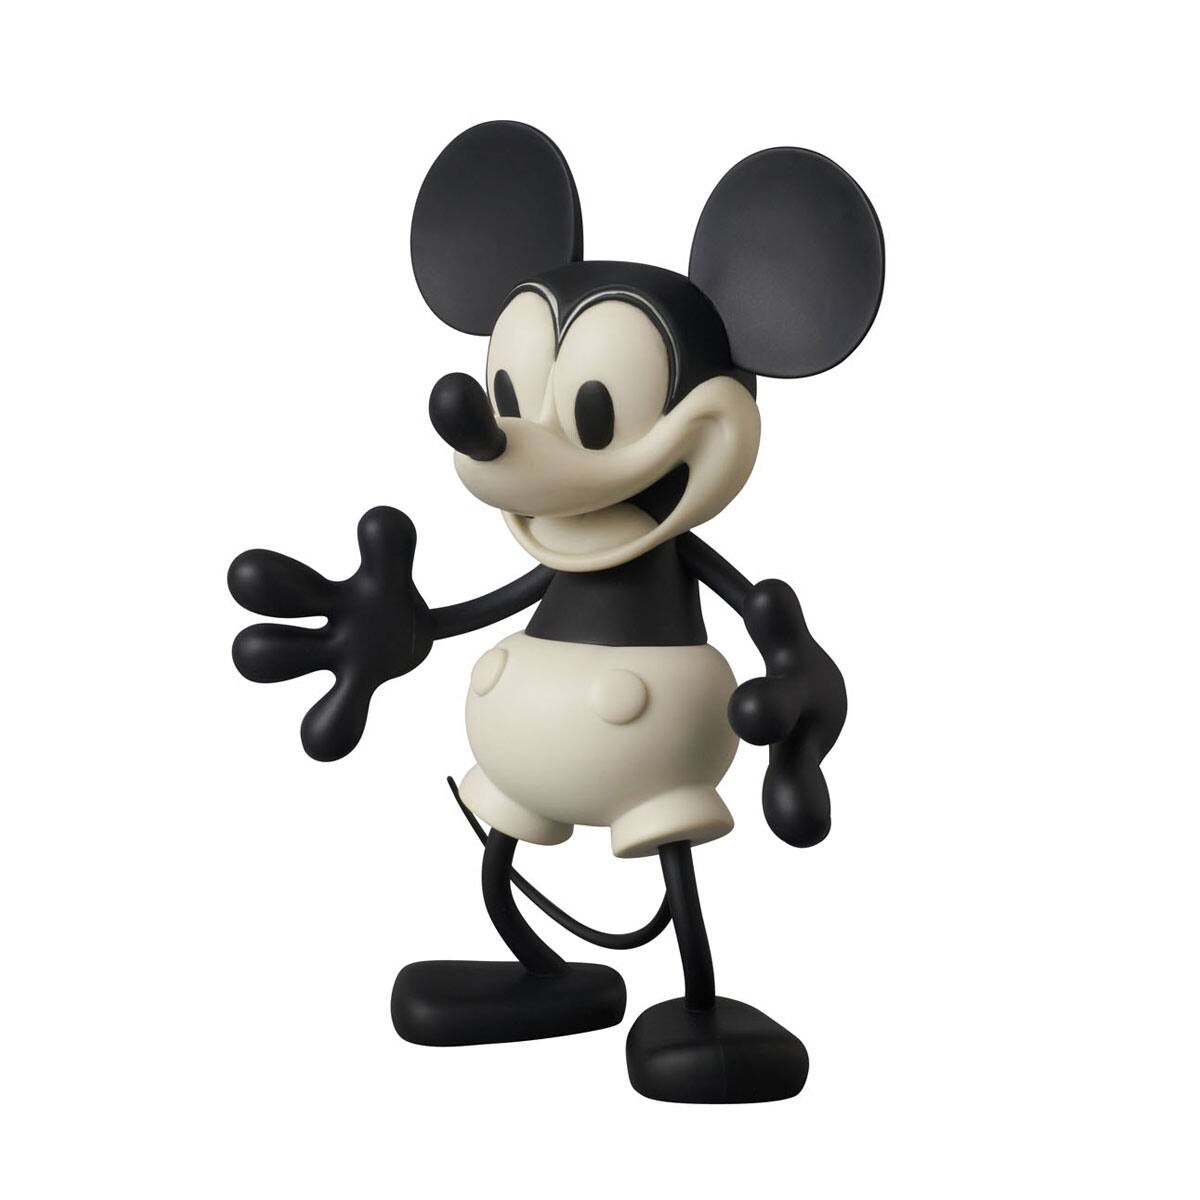 Medicom Toy Udf ミッキーマウス